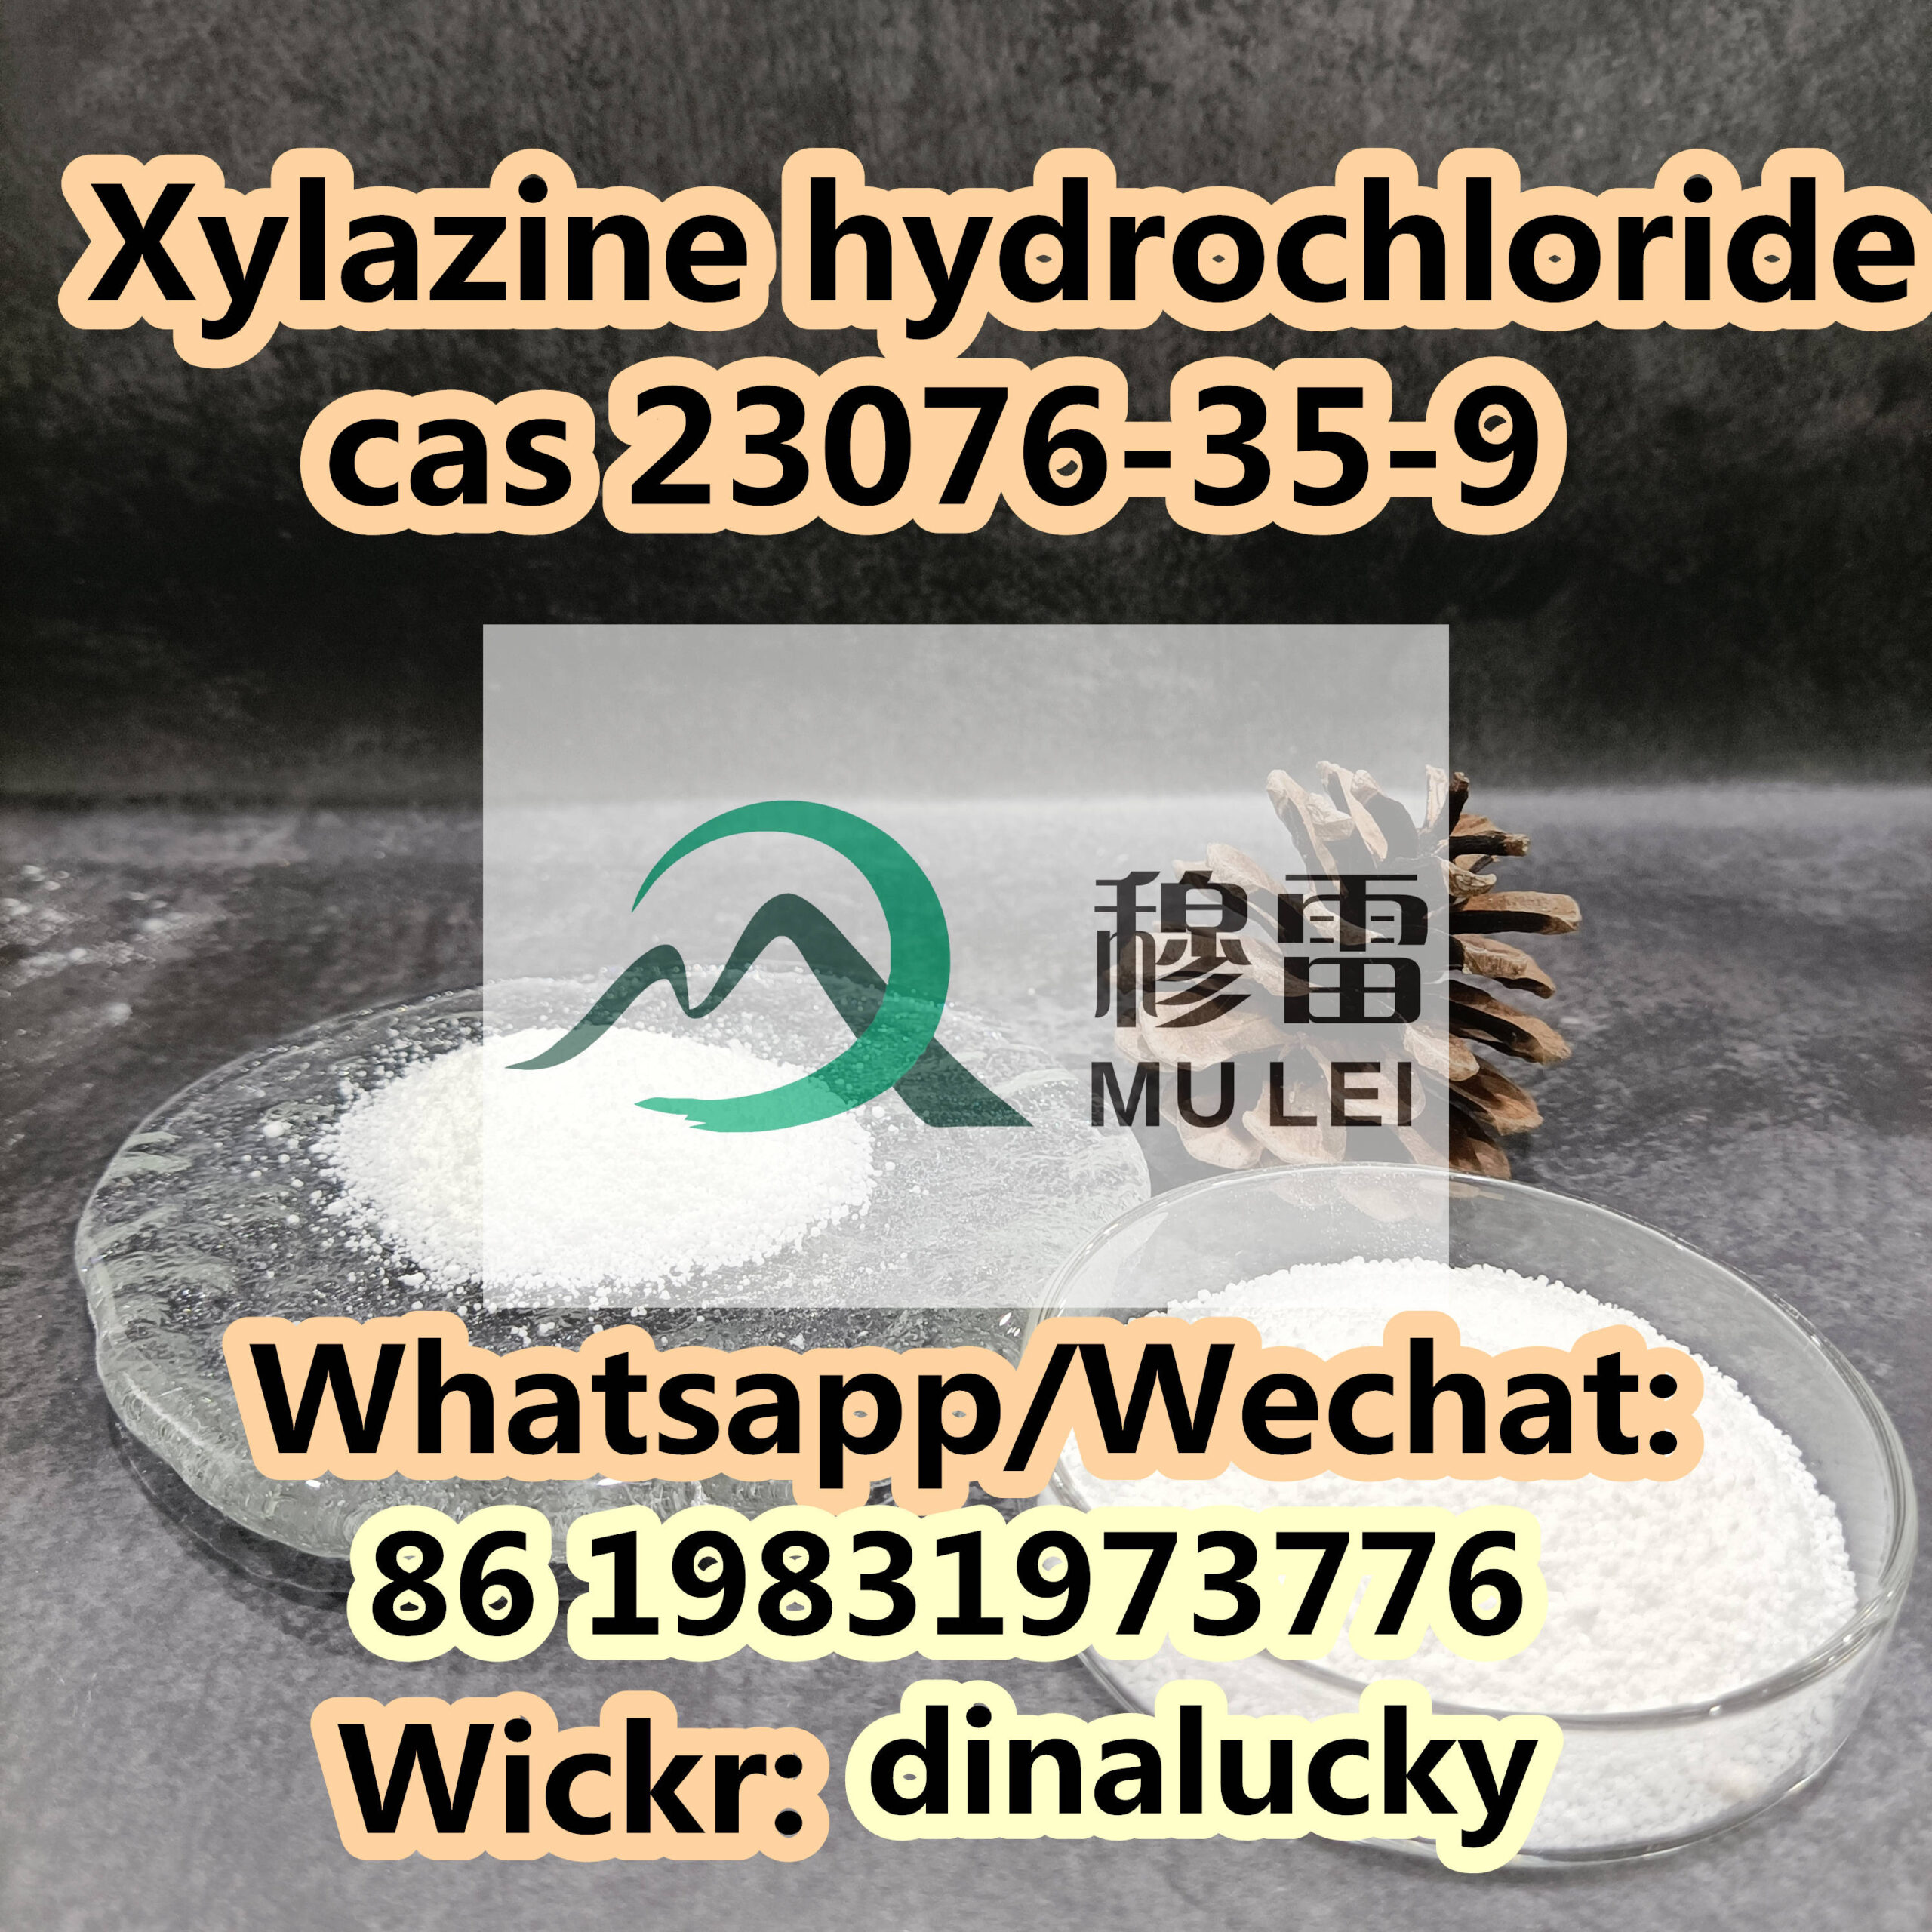 Xylazine hydrochloride cas 23076-35-9 Safe Delivery